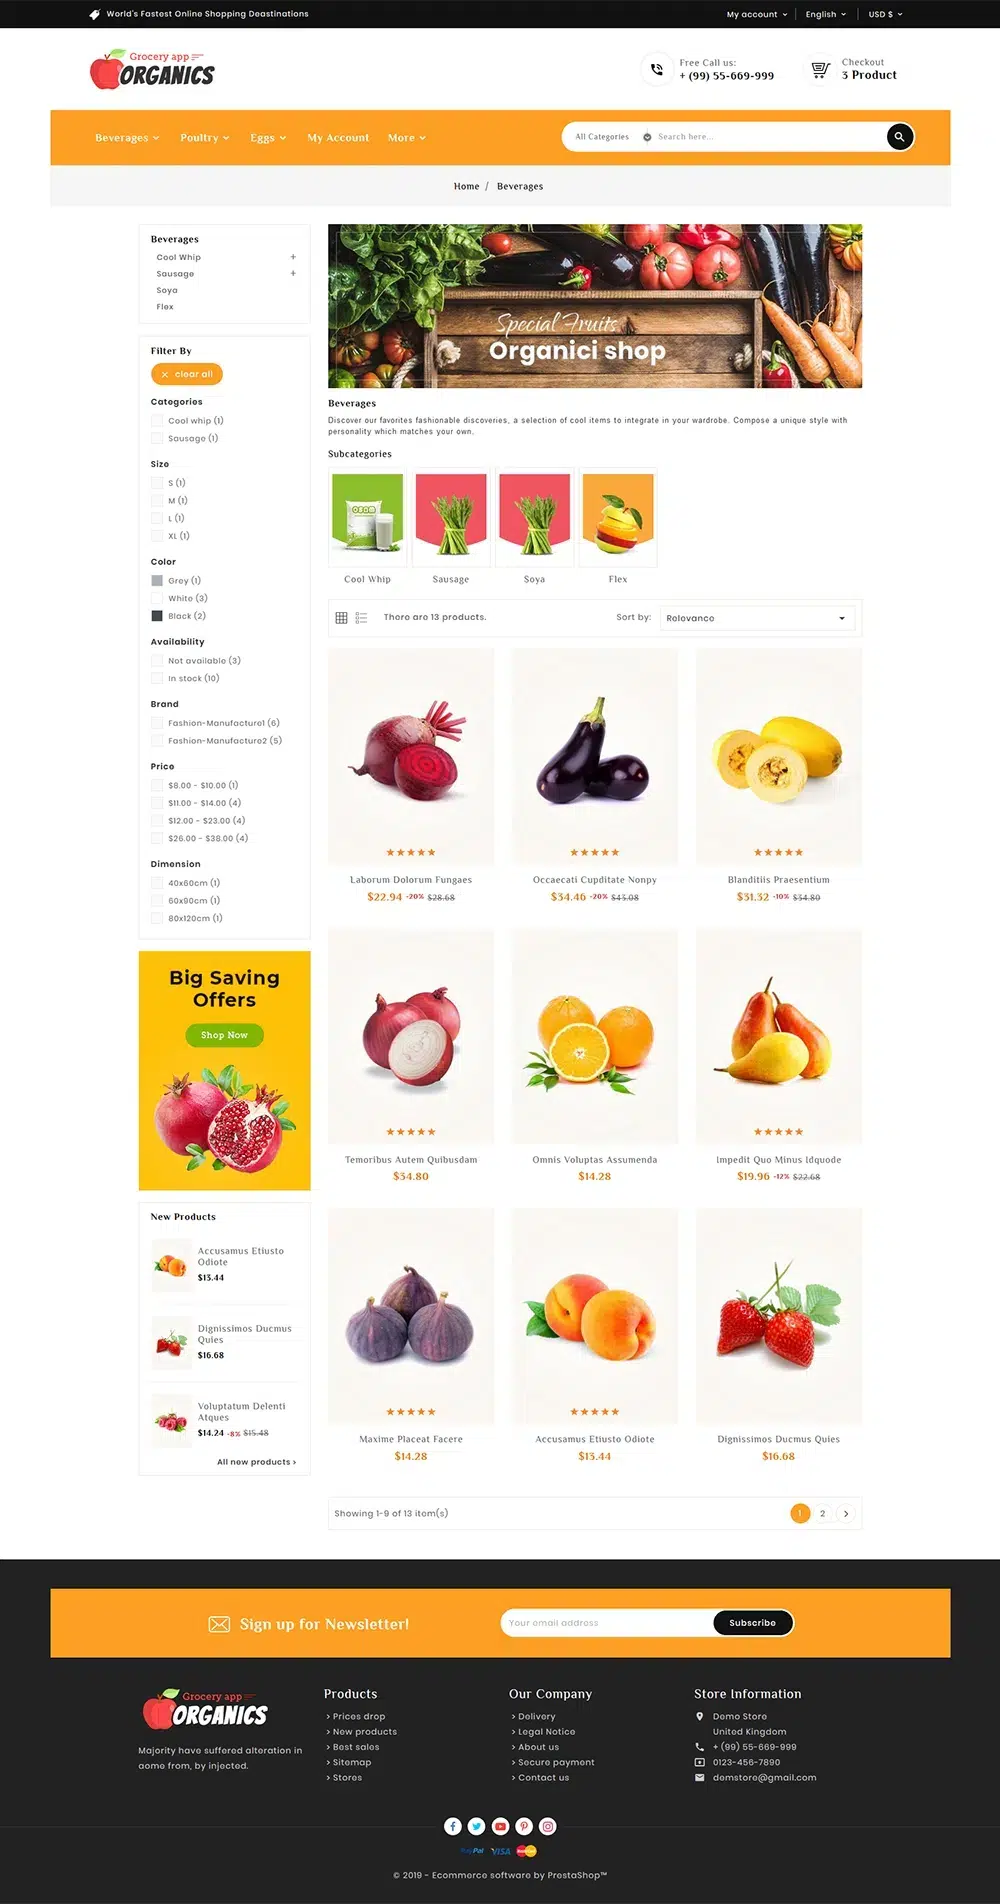 Organics - Grocery App &Amp; Market - Prestashop Responsive Theme